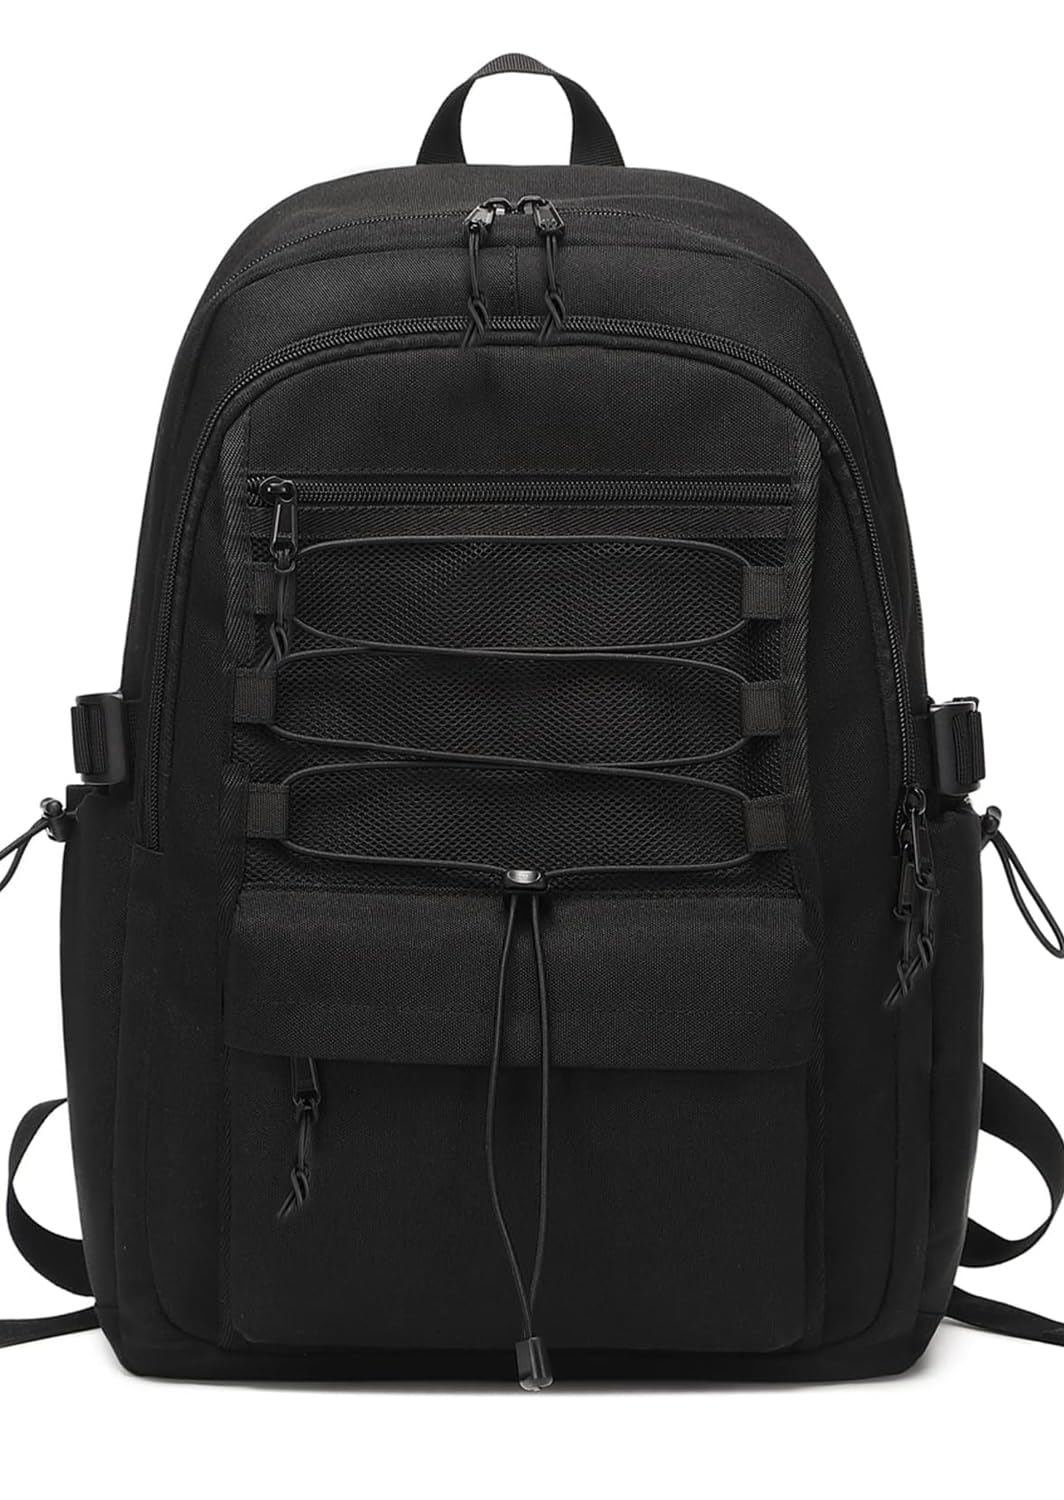 Lmeison Backpack for Girls School Backpacks for Teen Women College Bookbag Waterproof School Bag for Middle School High School Unisex Laptop Backpack Travel Daypack for Work, Black